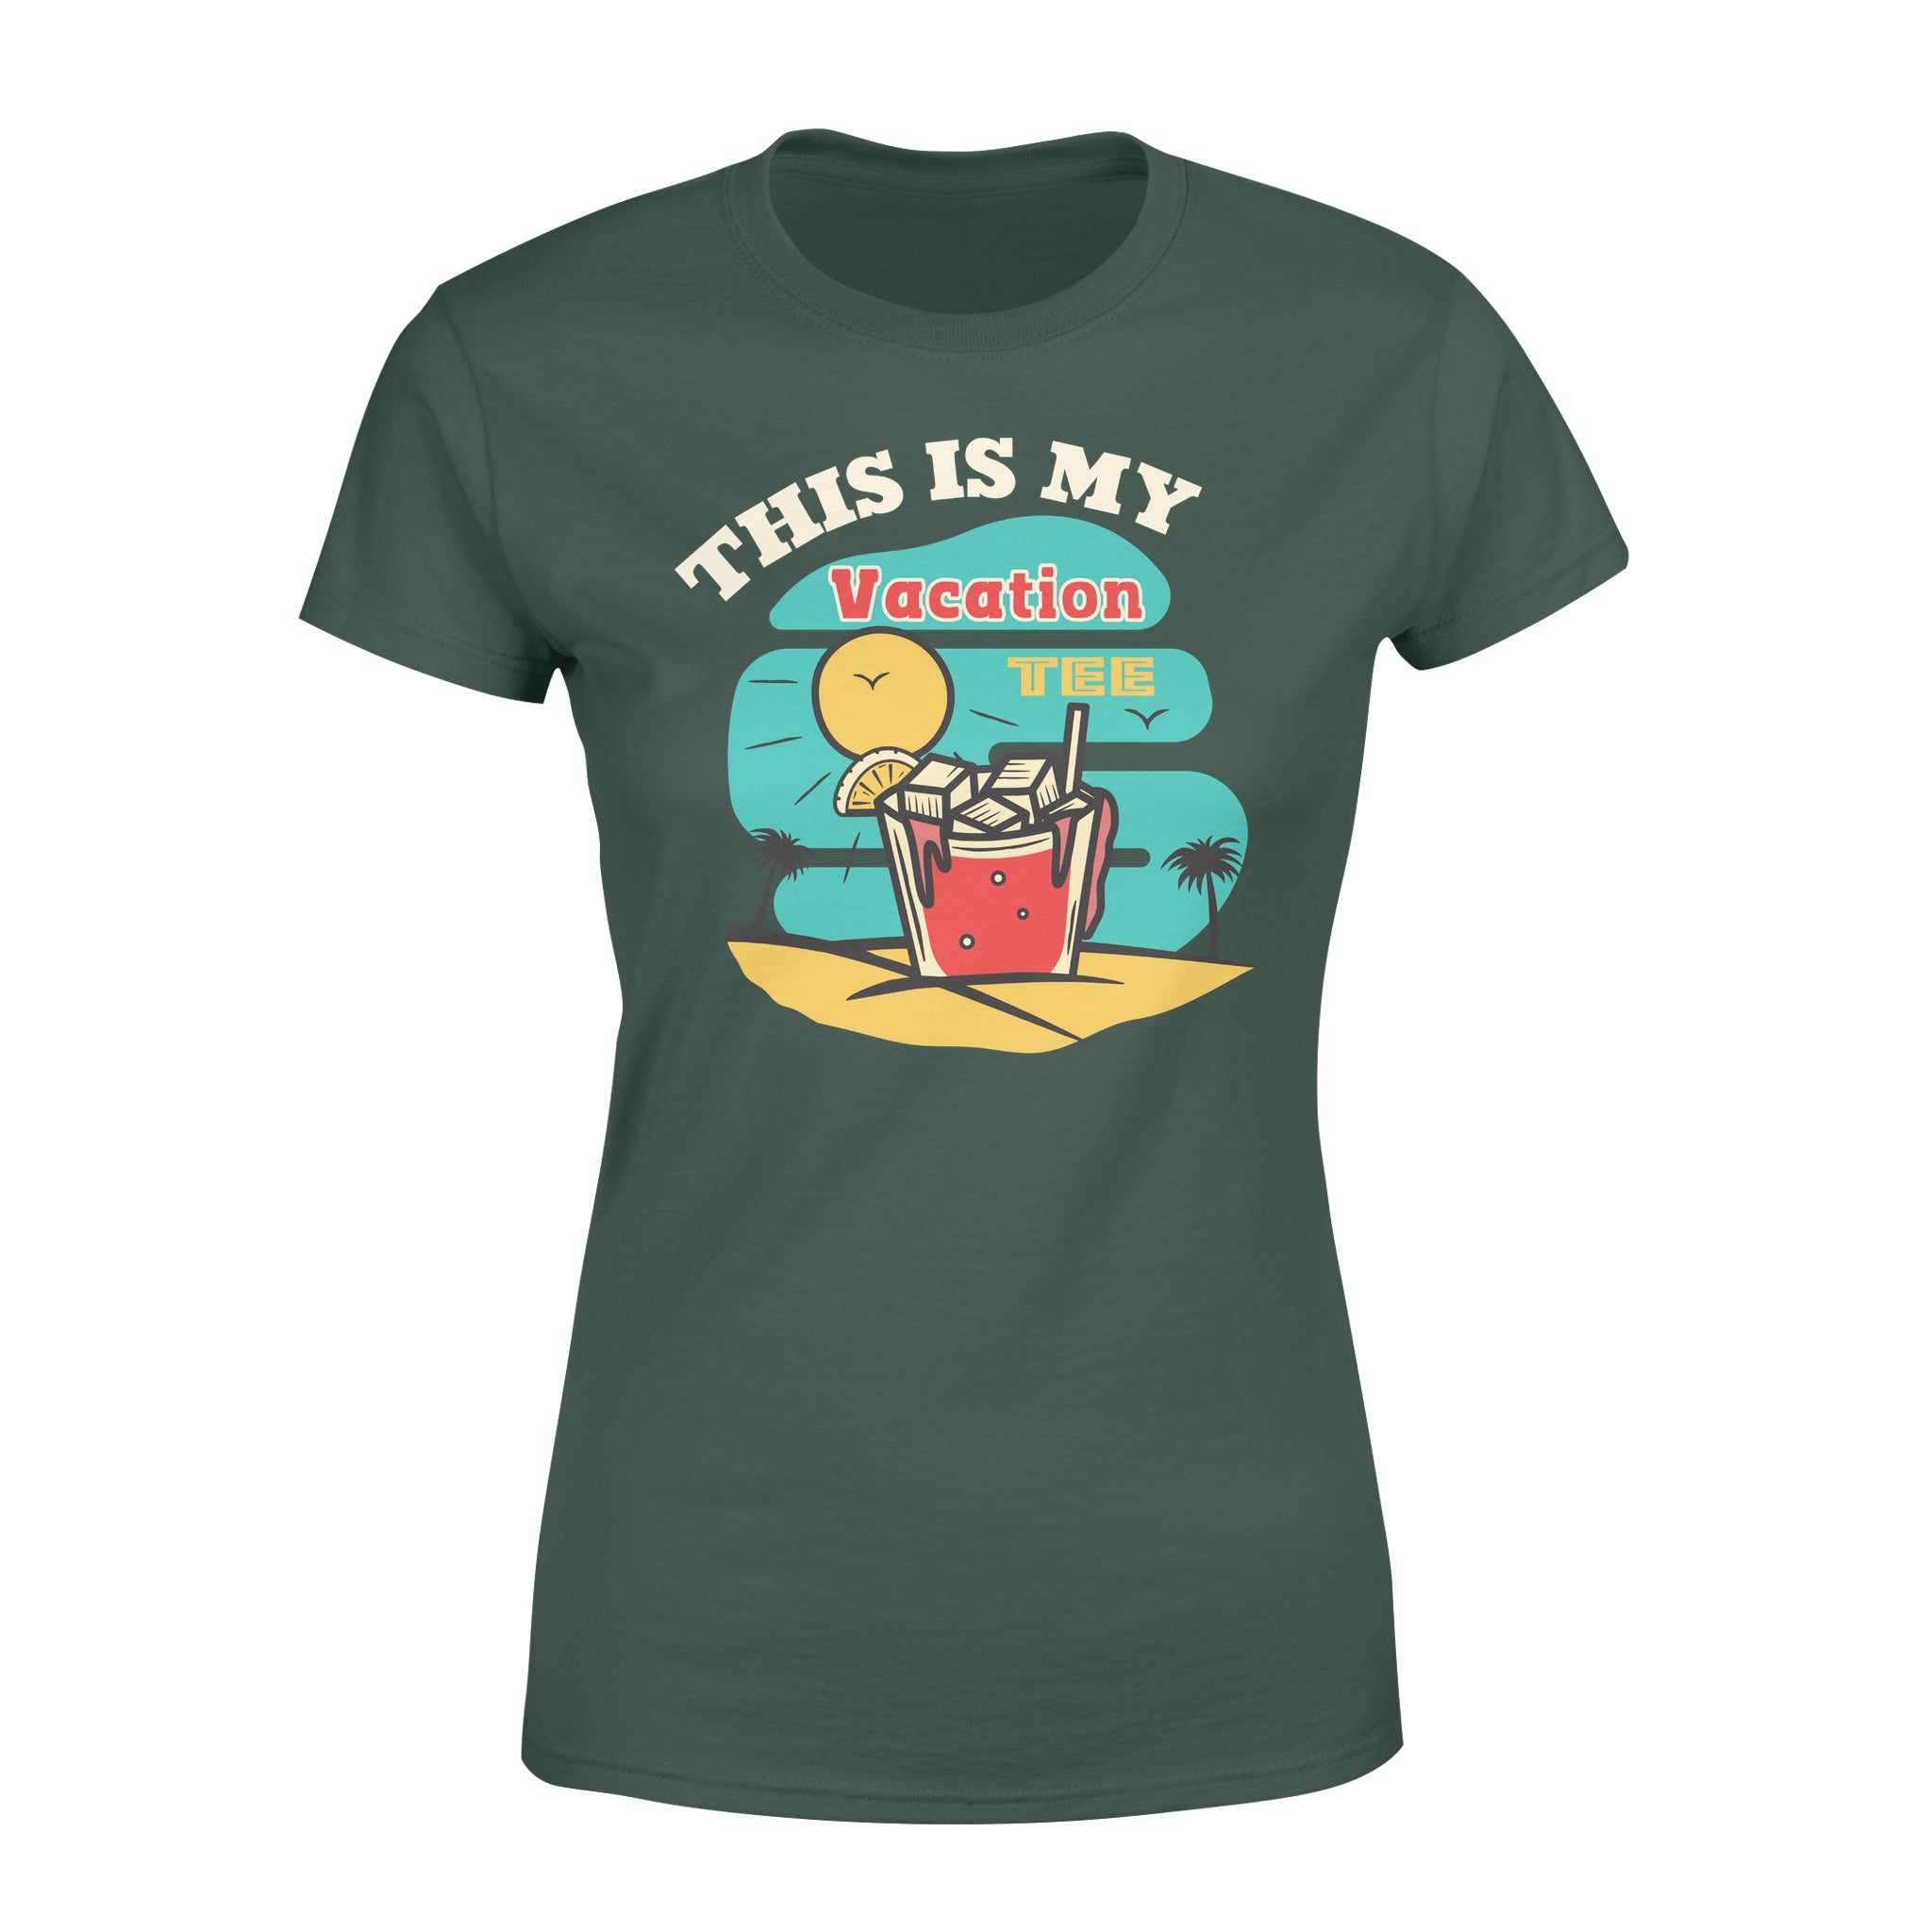 Vacation Tee - Women's T-shirt